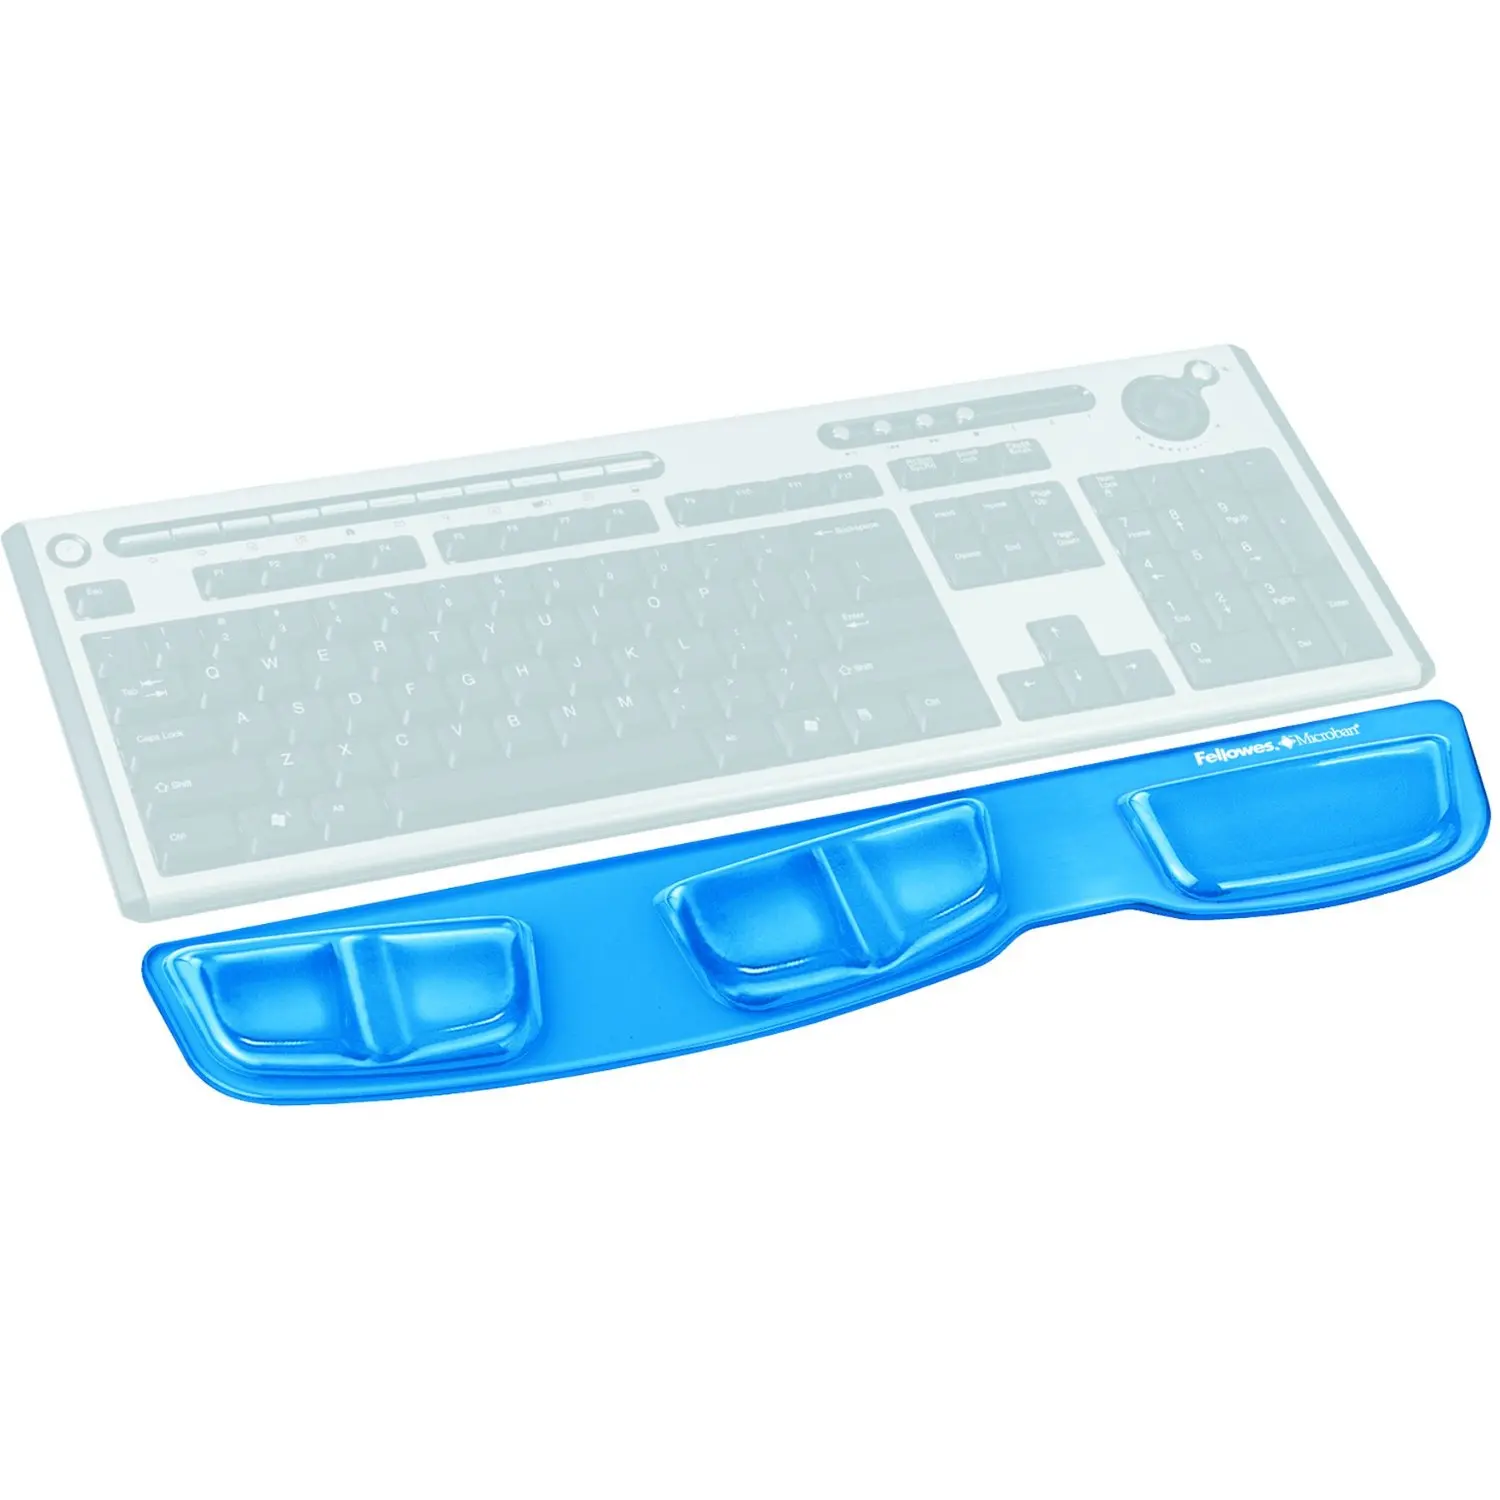 Keyboard support. Гелевая клавиатура. Лед коврик для клавиатуры. Fellowes Microban Split Design Keyboard. Манжеты Arctic Gel™ Kit (детские).